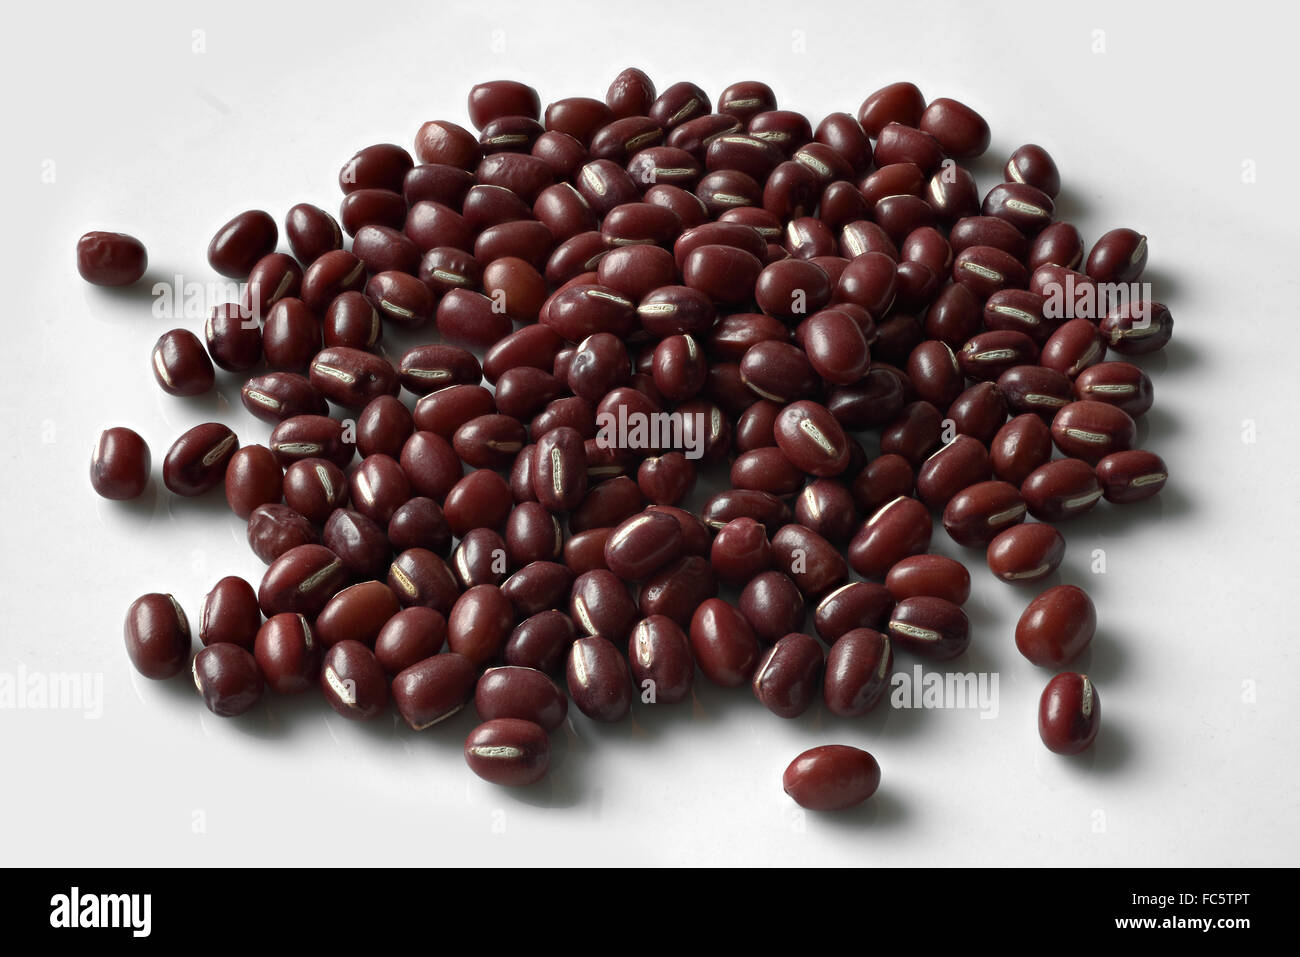 Adzuki Beans, Cutout Stock Photo